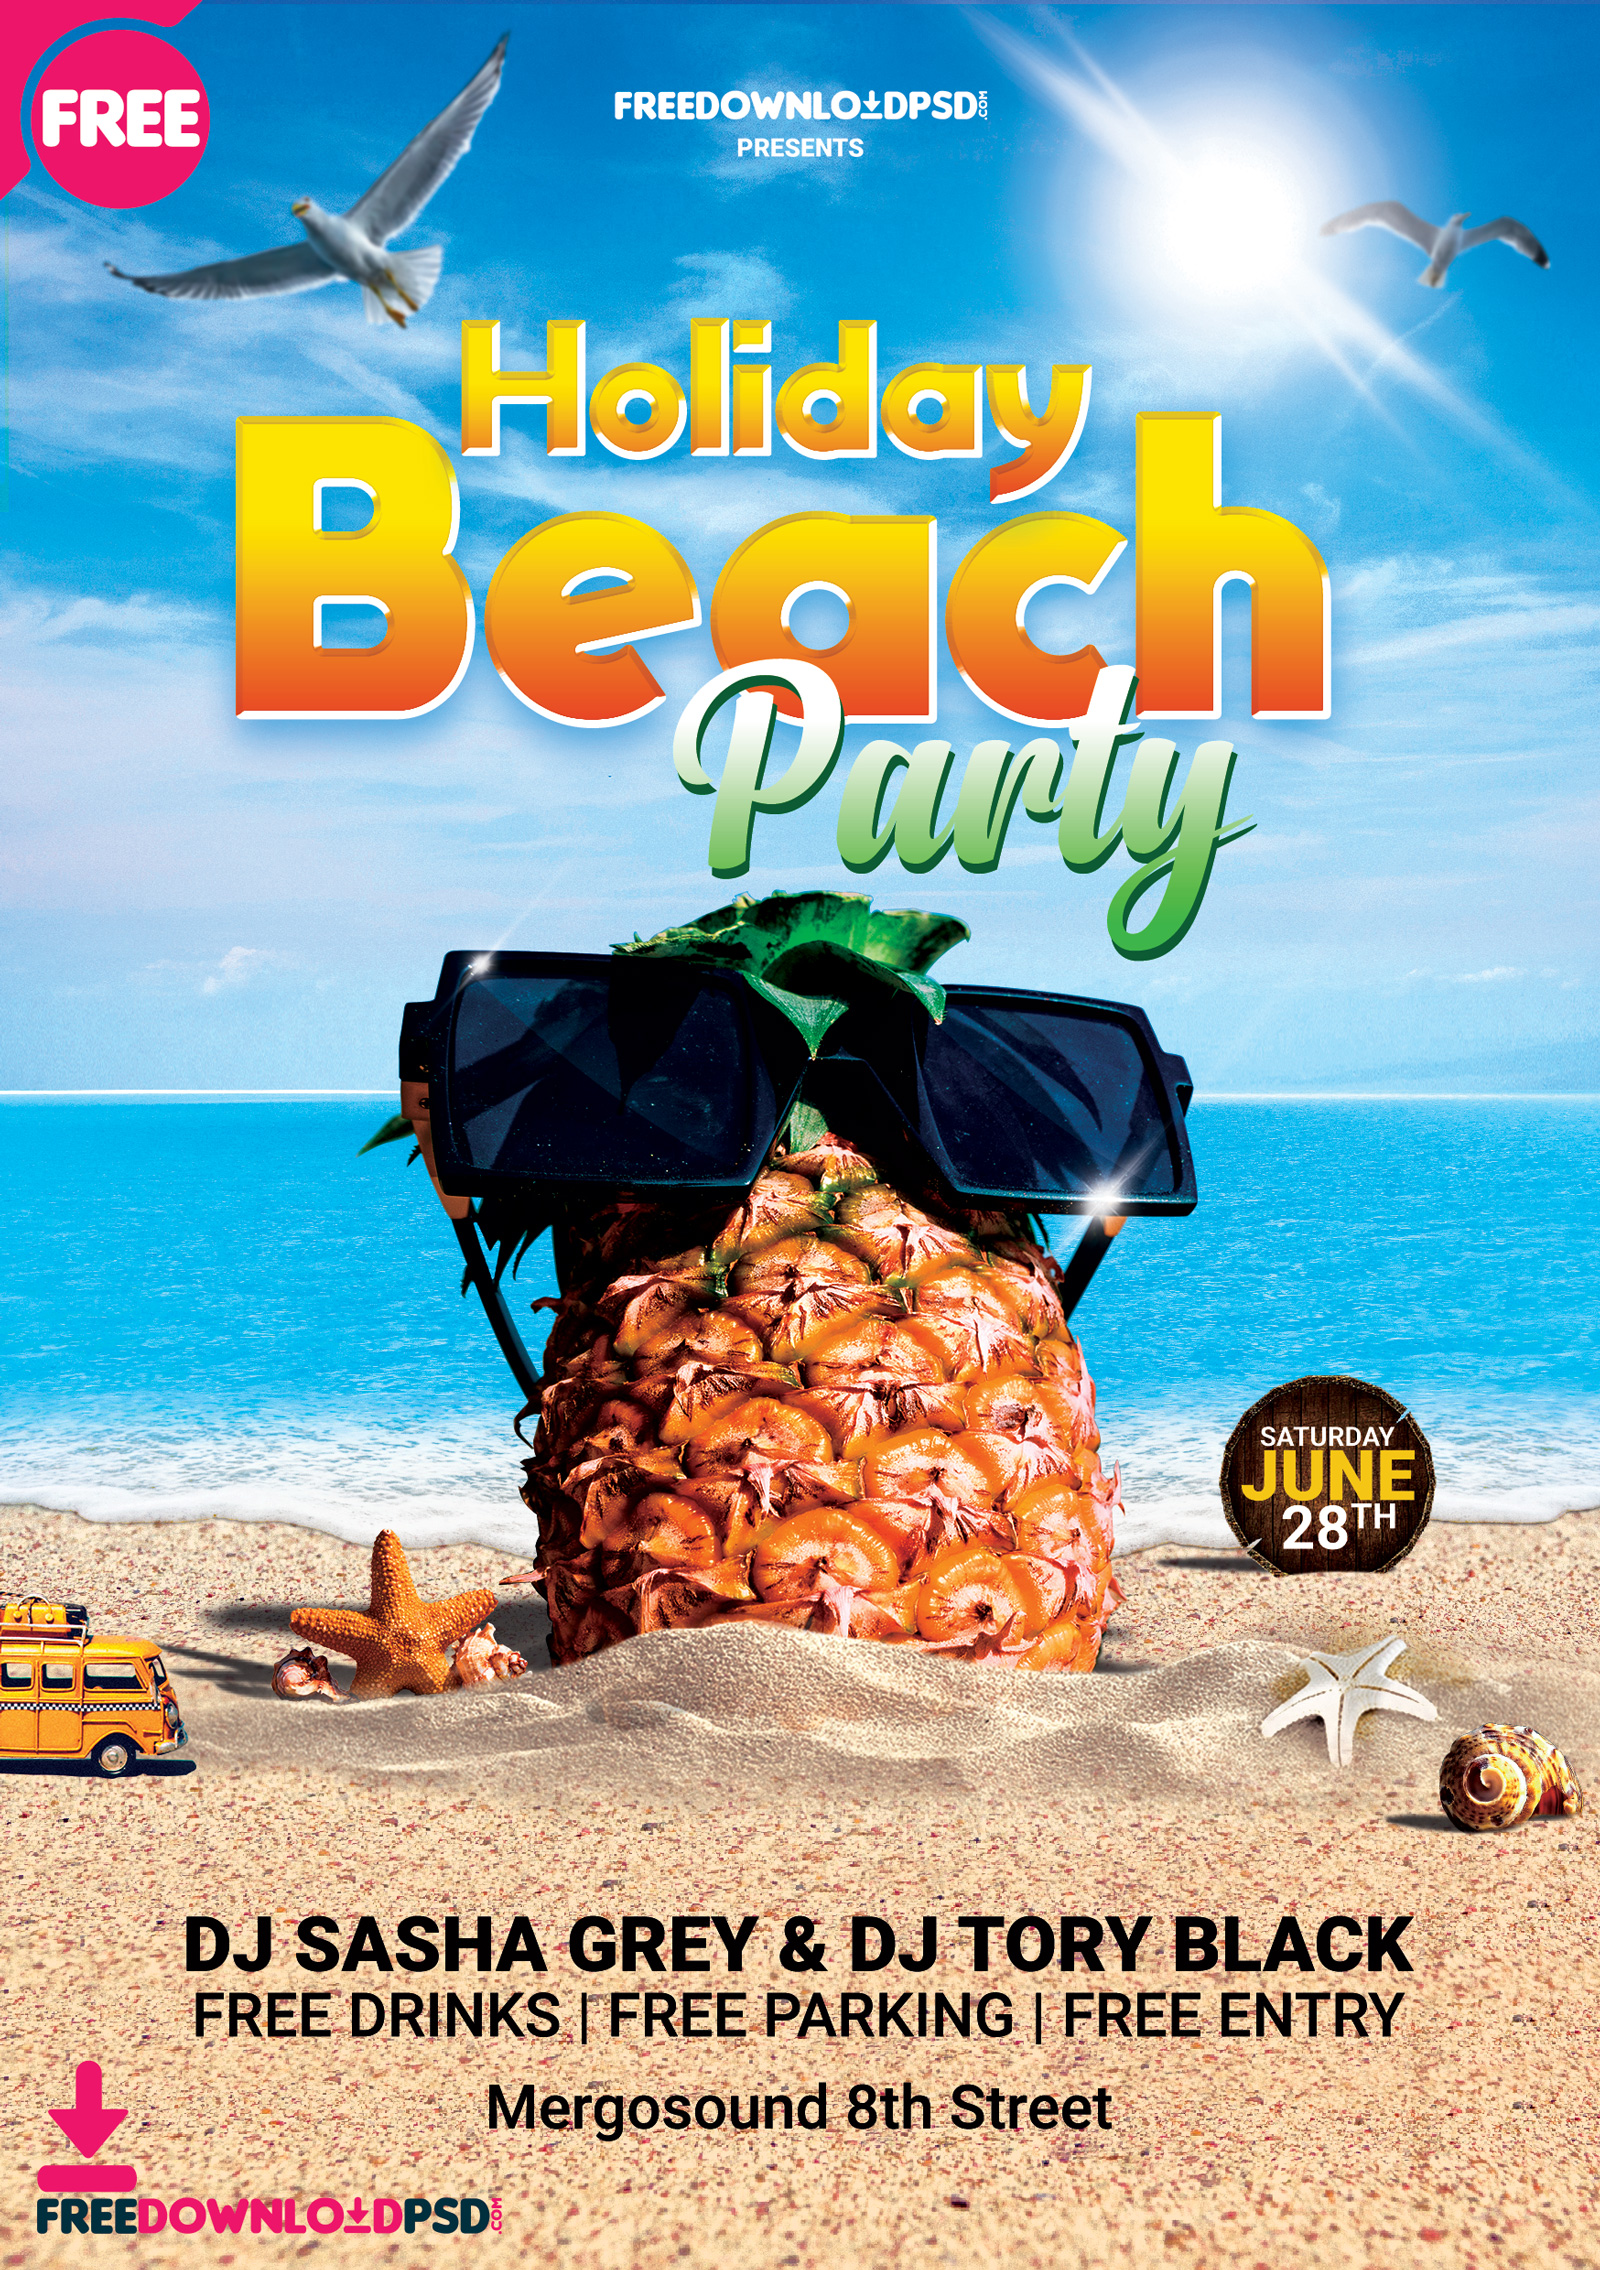 free bikini party flyer templates free download